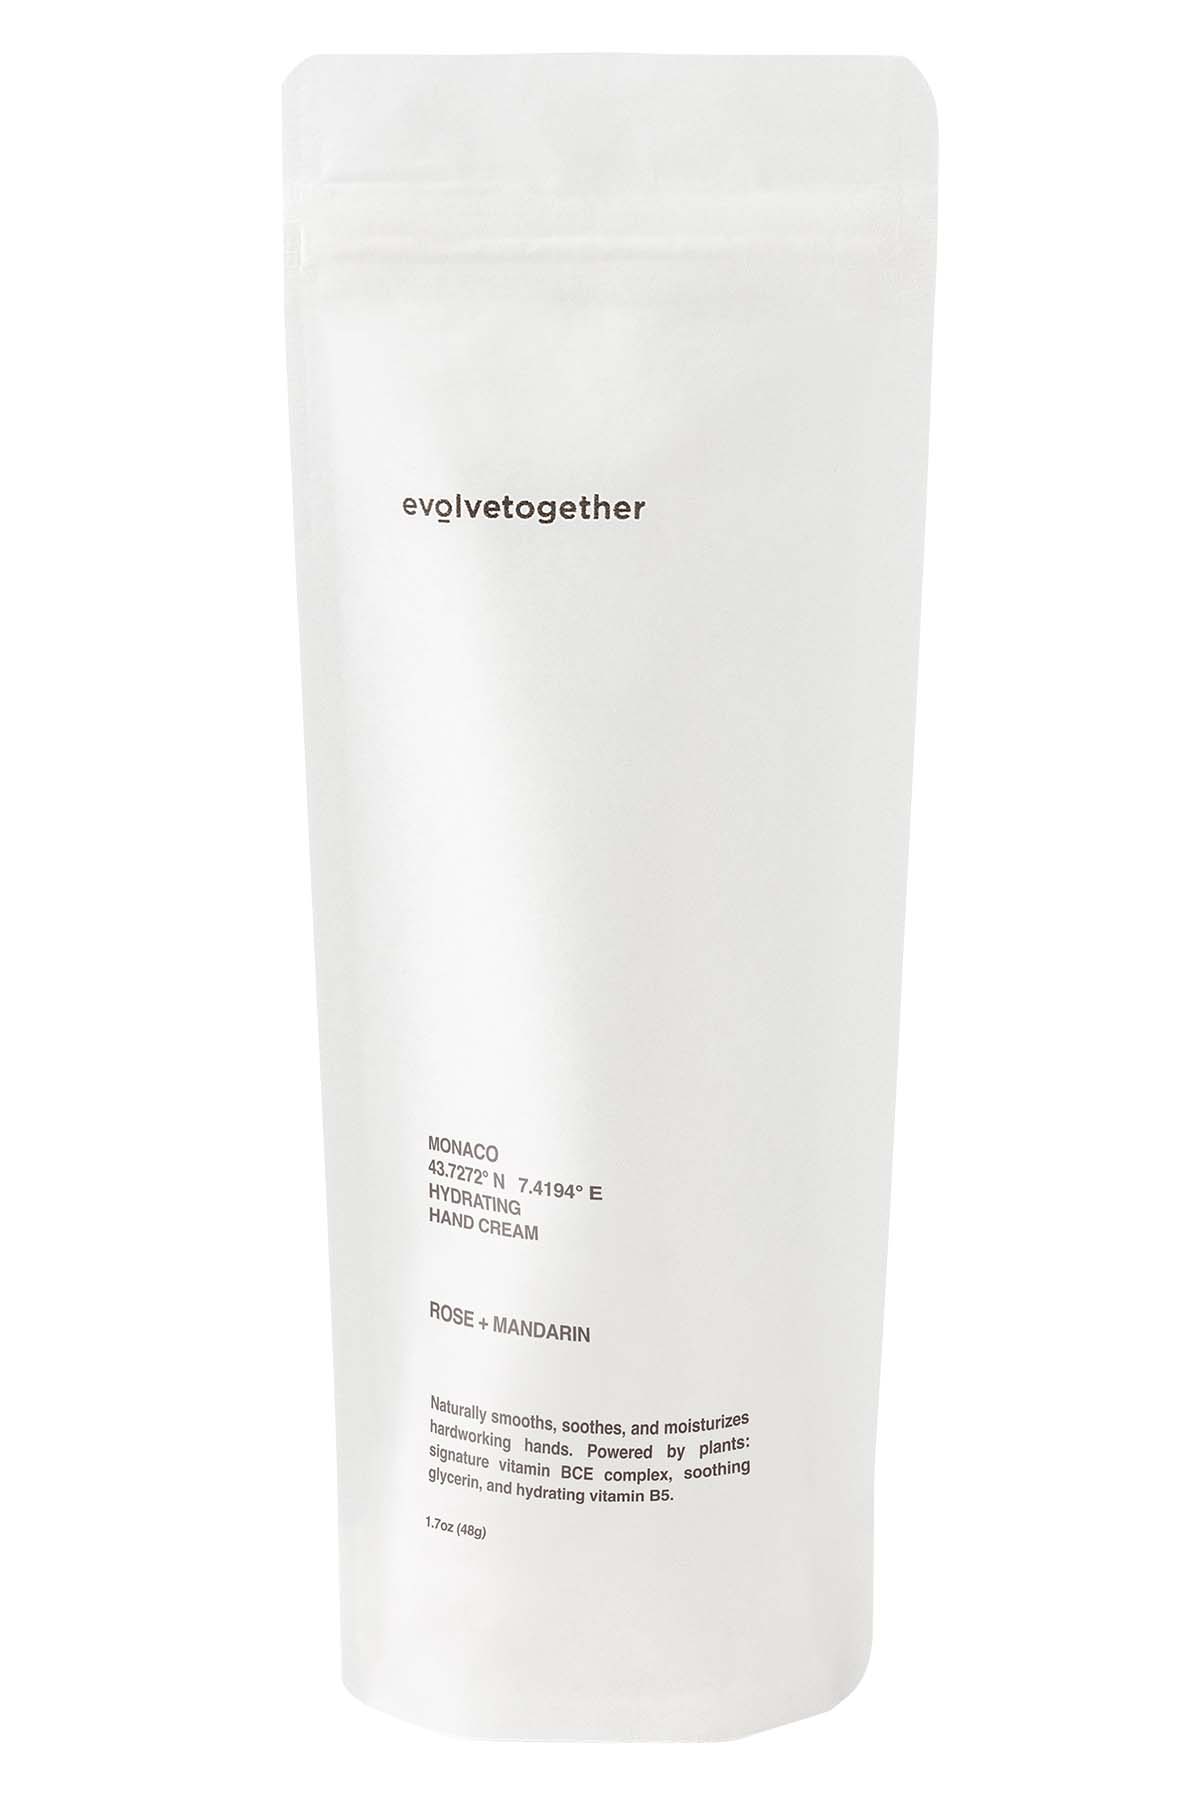 Evolvetogether Monaco Hydrating Hand Cream Packaging